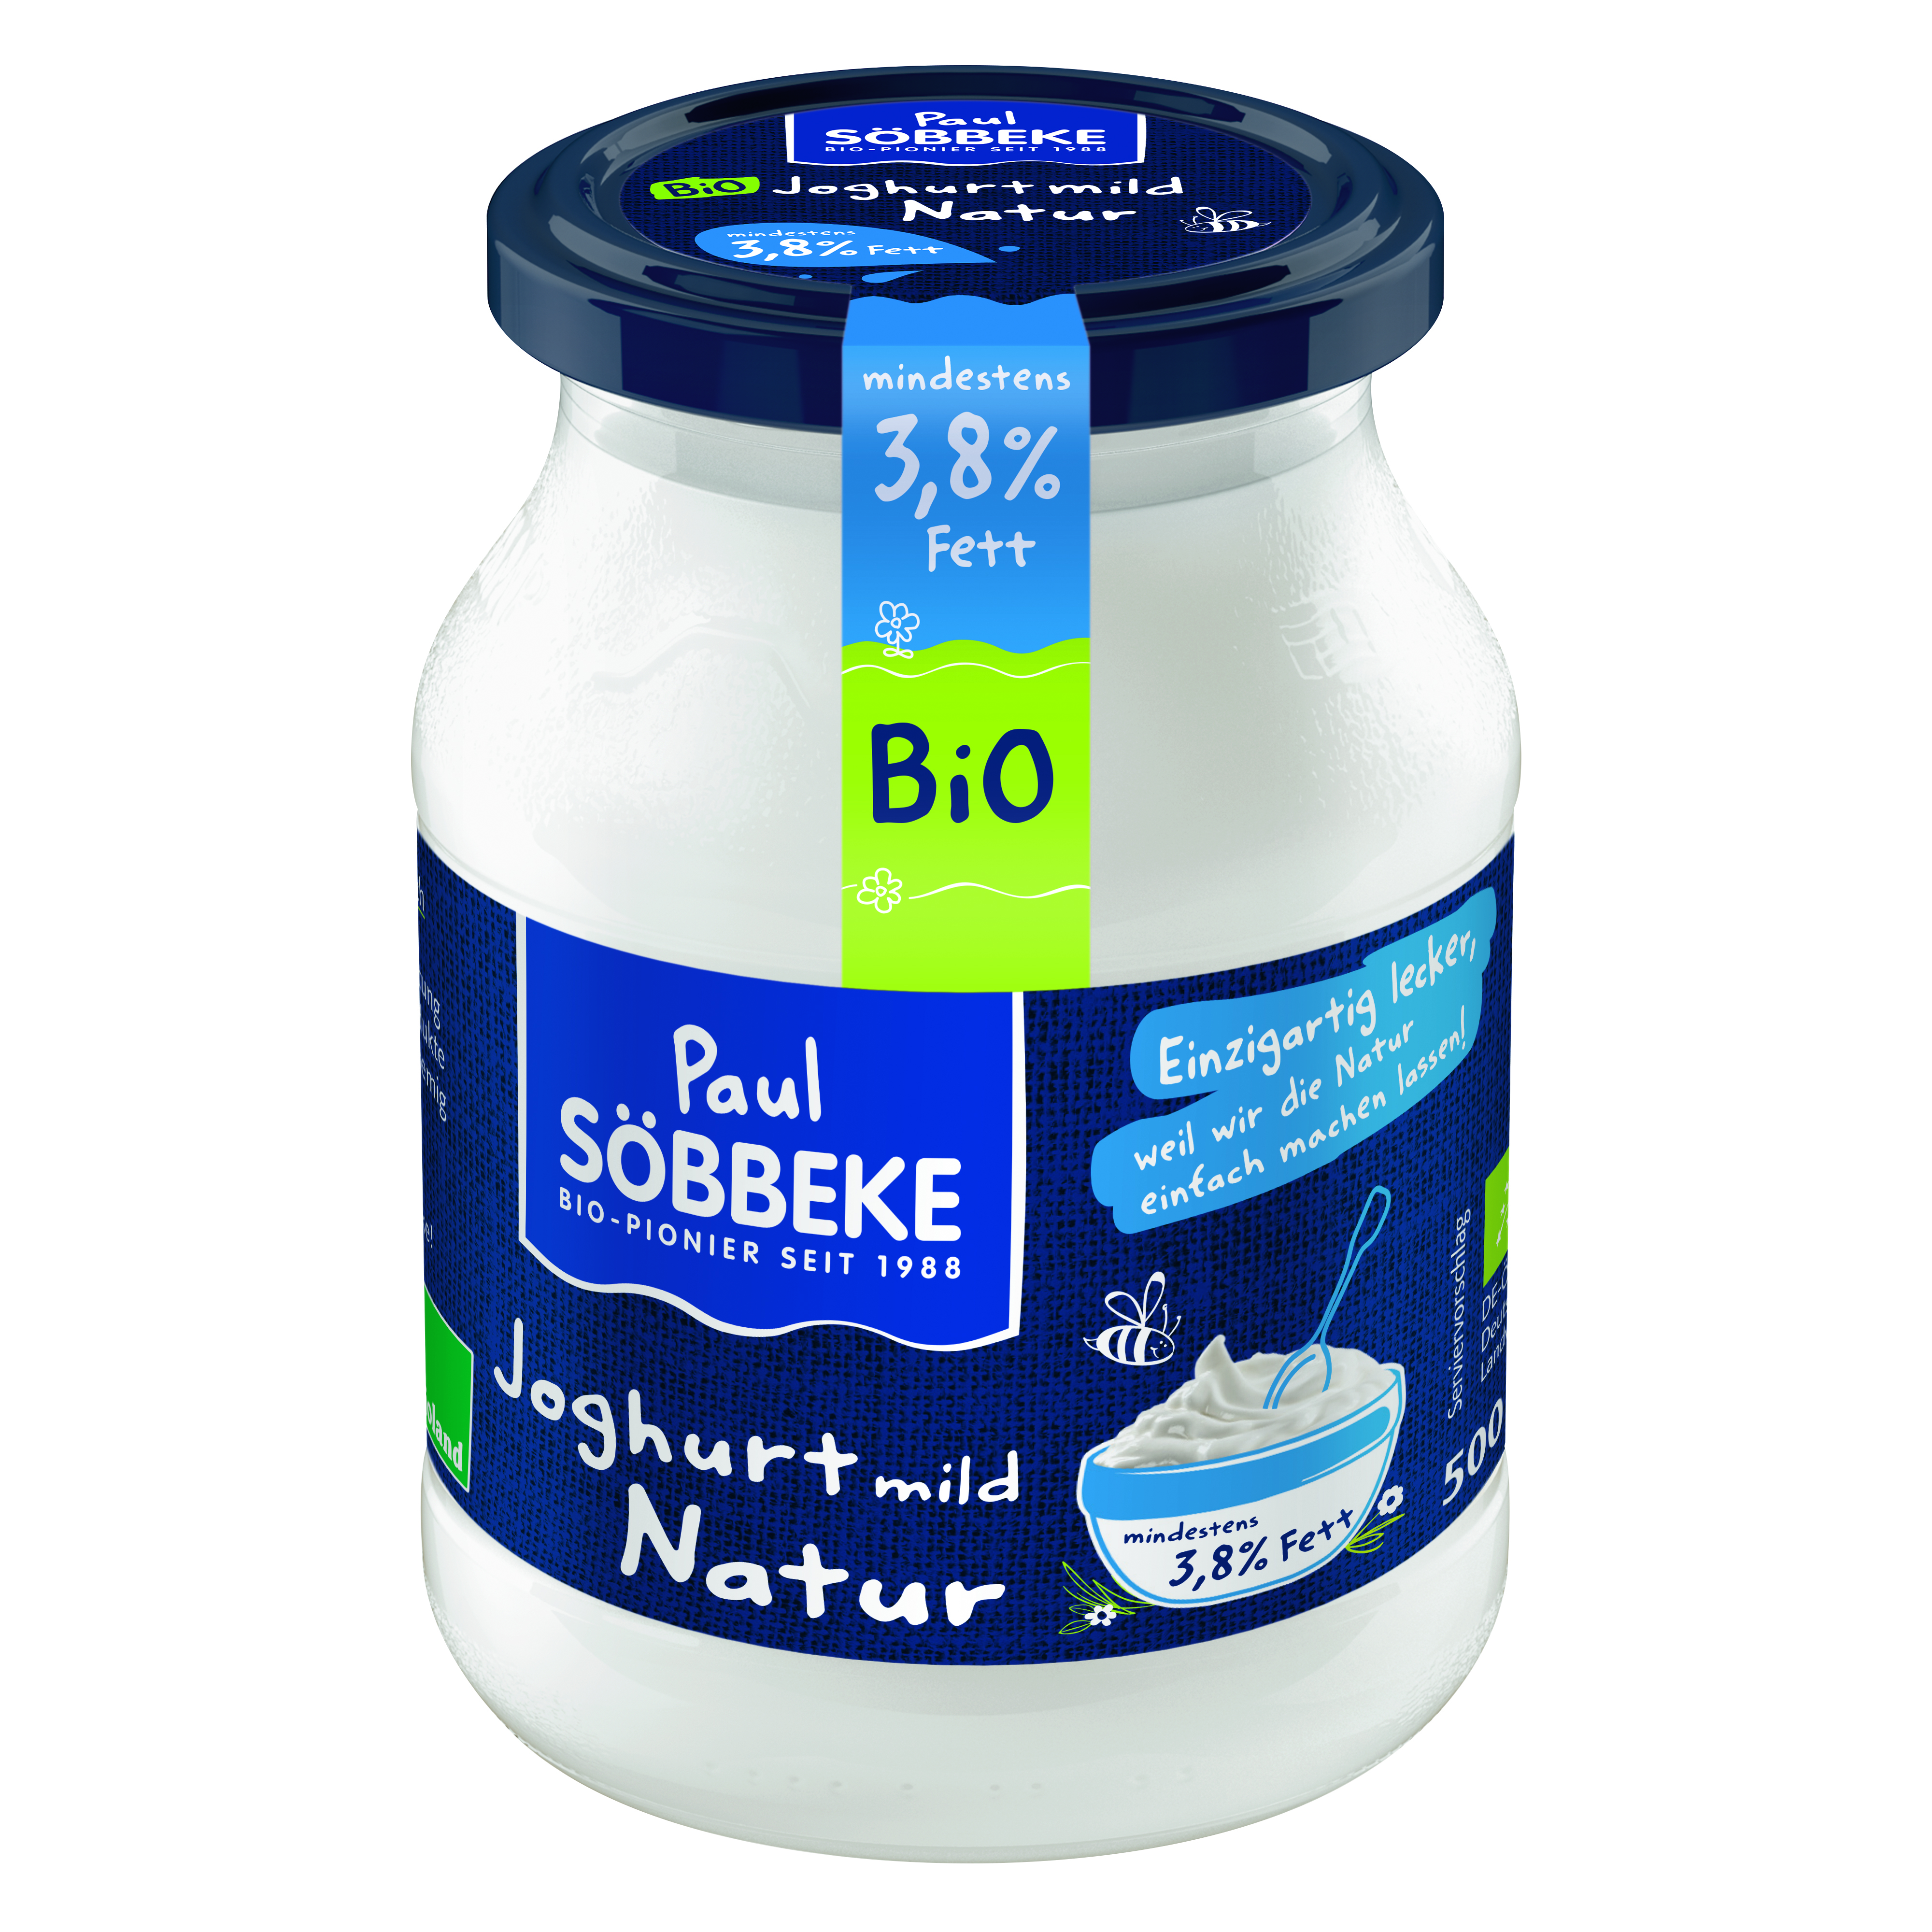 Söbbeke Yoghurt natuur 3,8% bio 500g